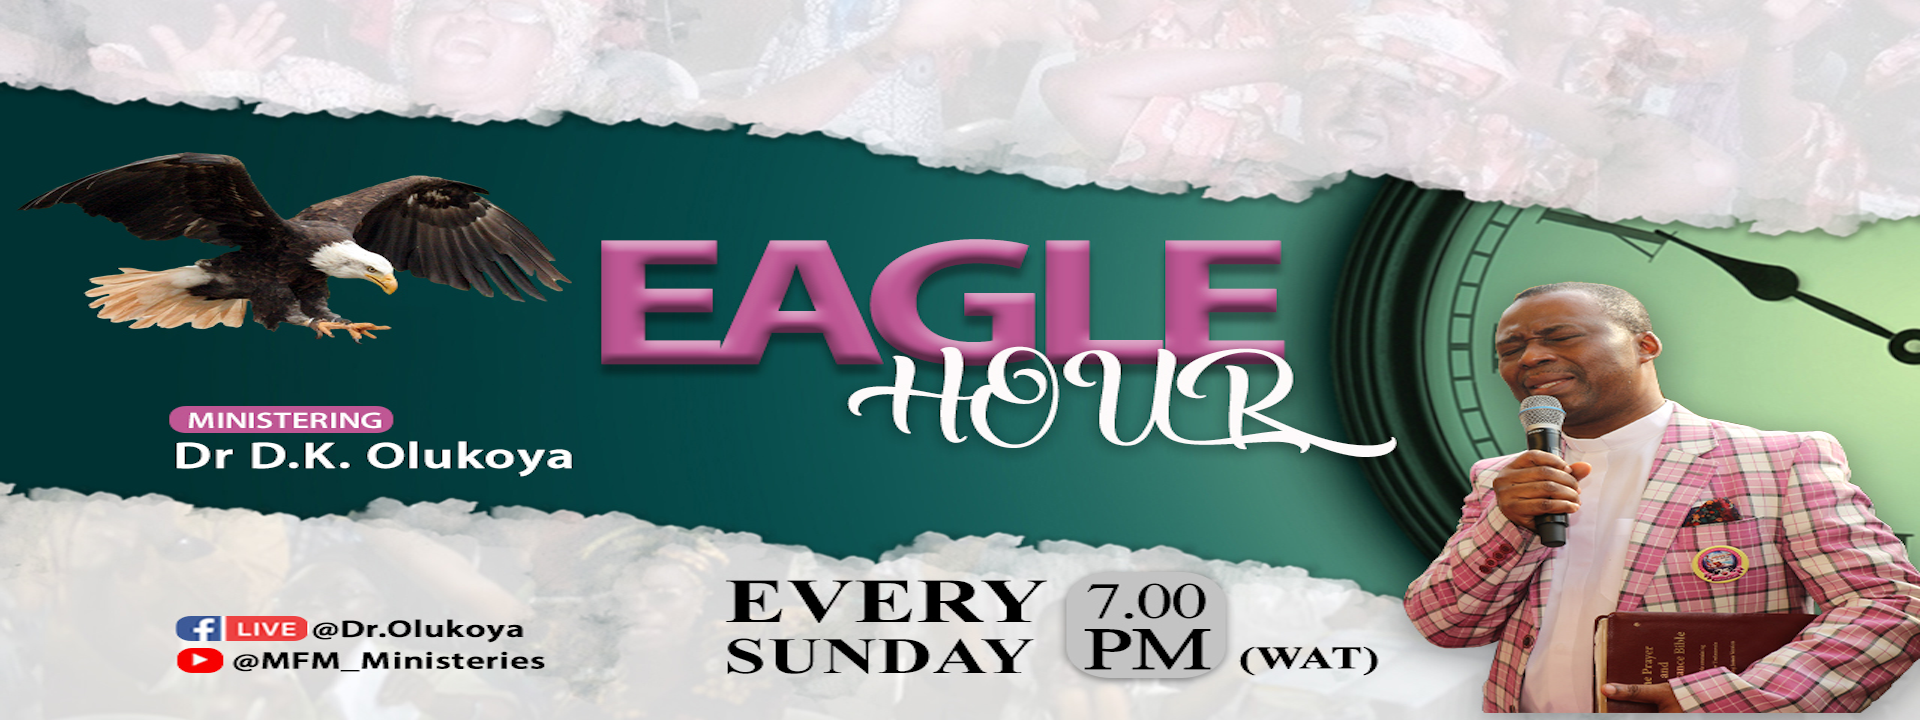 MFM Deliverance Ministries Eagle Hour